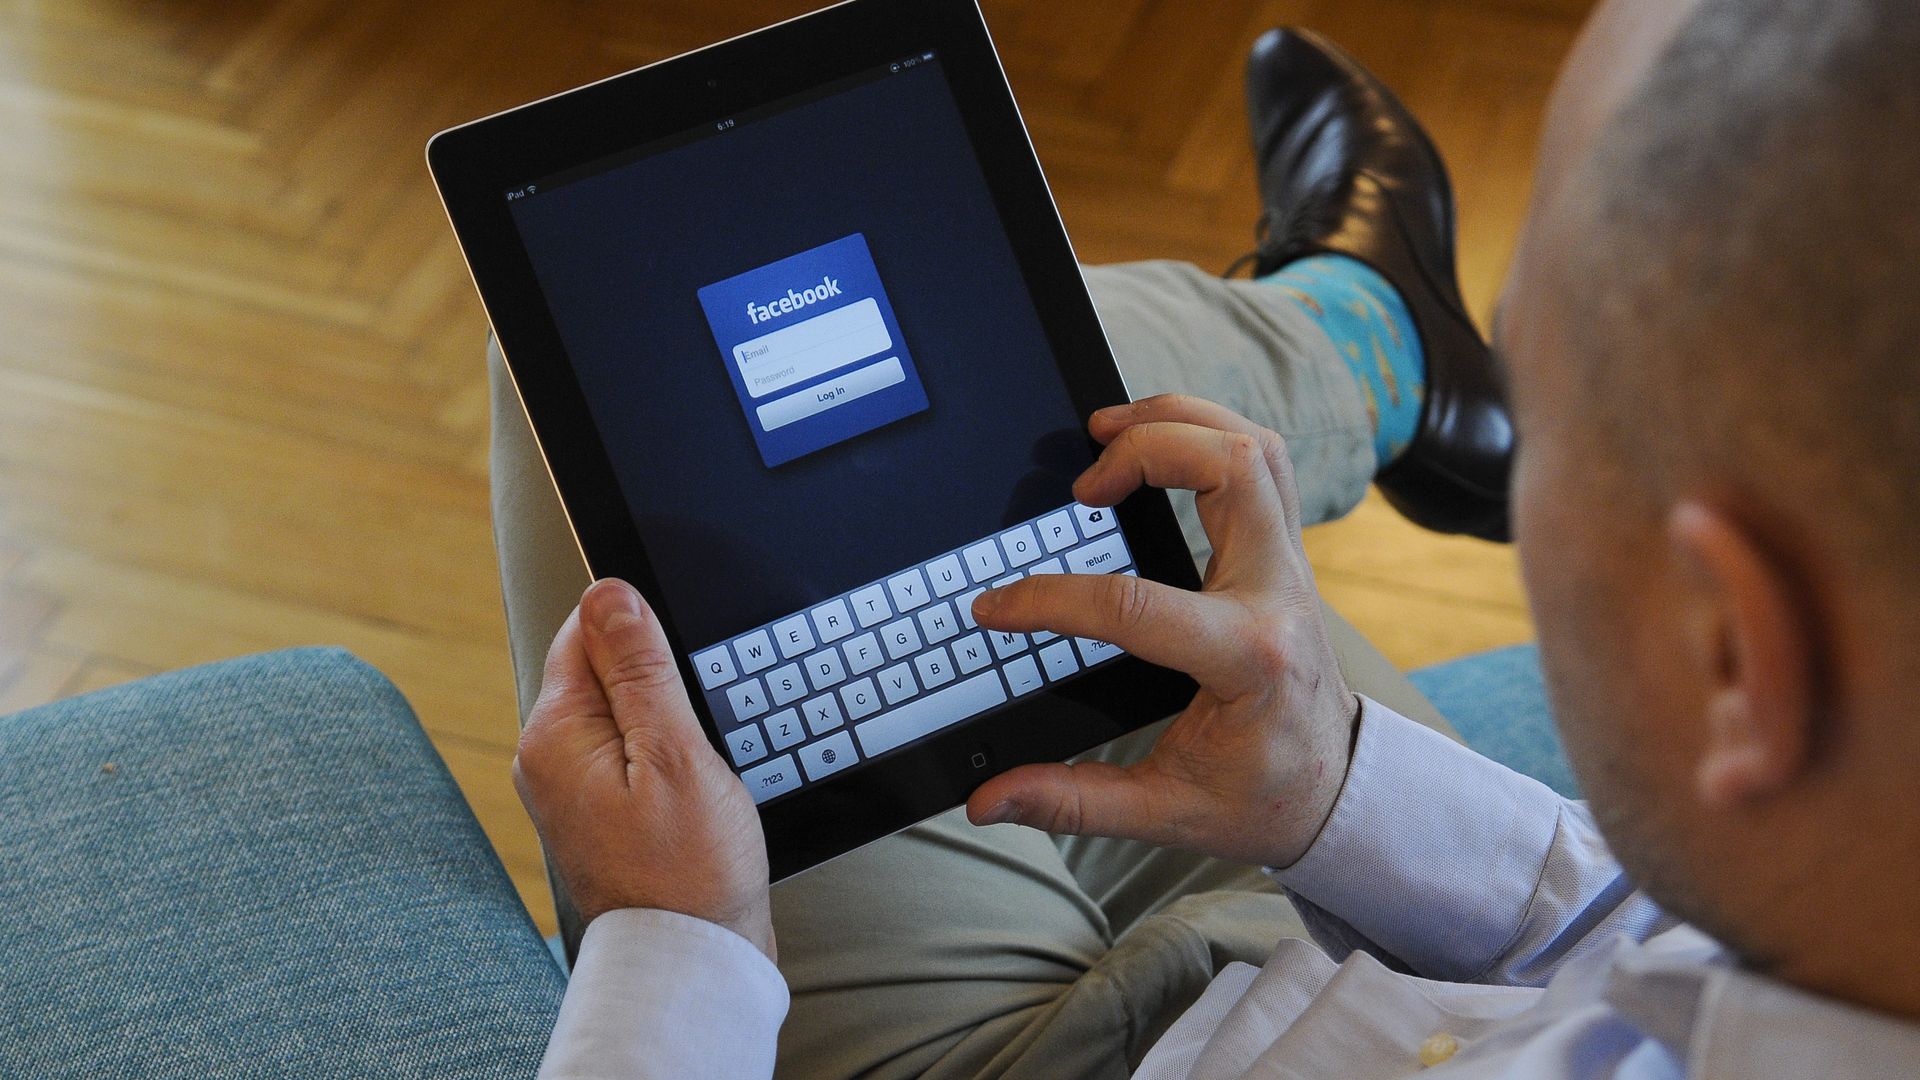 A man is seen holding an iPad with Facebook login screen. 